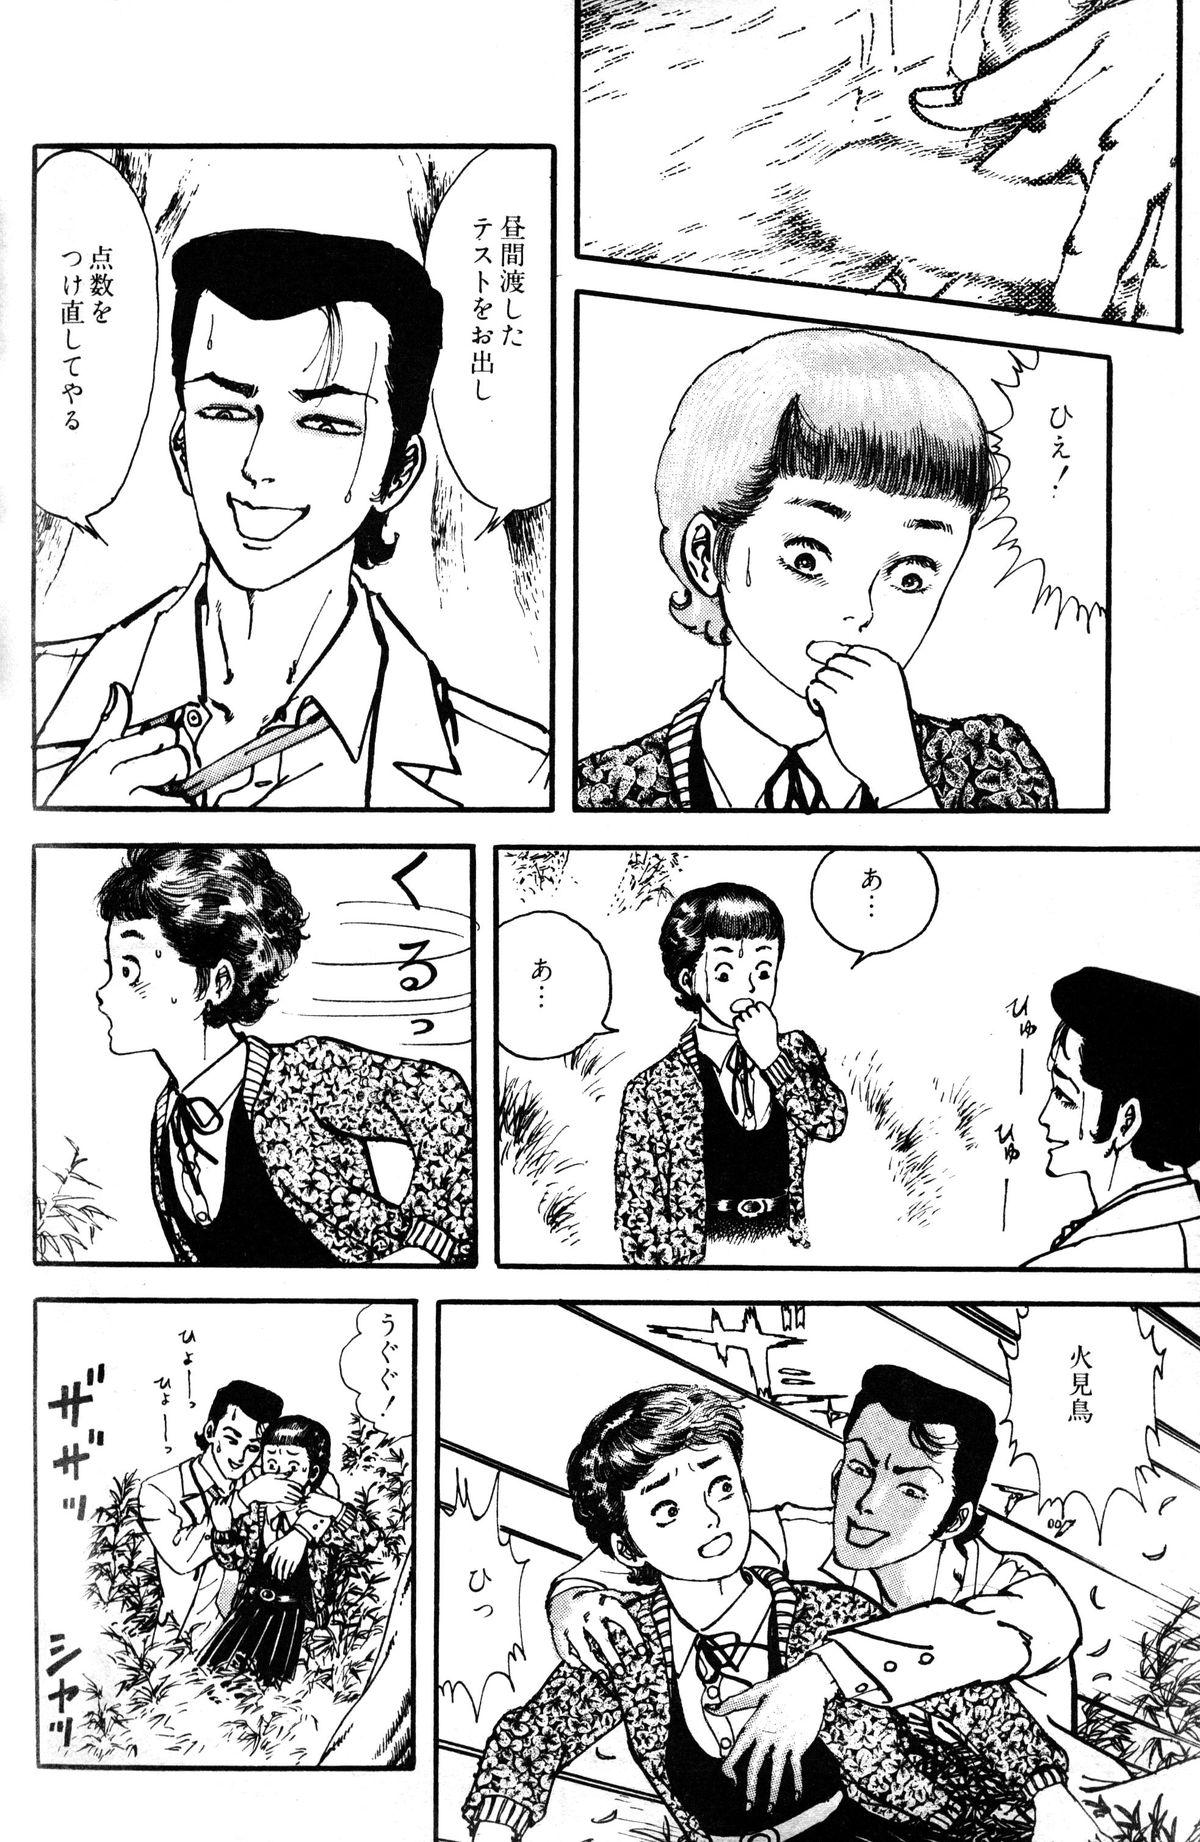 Melon Comic No. 01, メロンコミック 昭和59年6月号 137